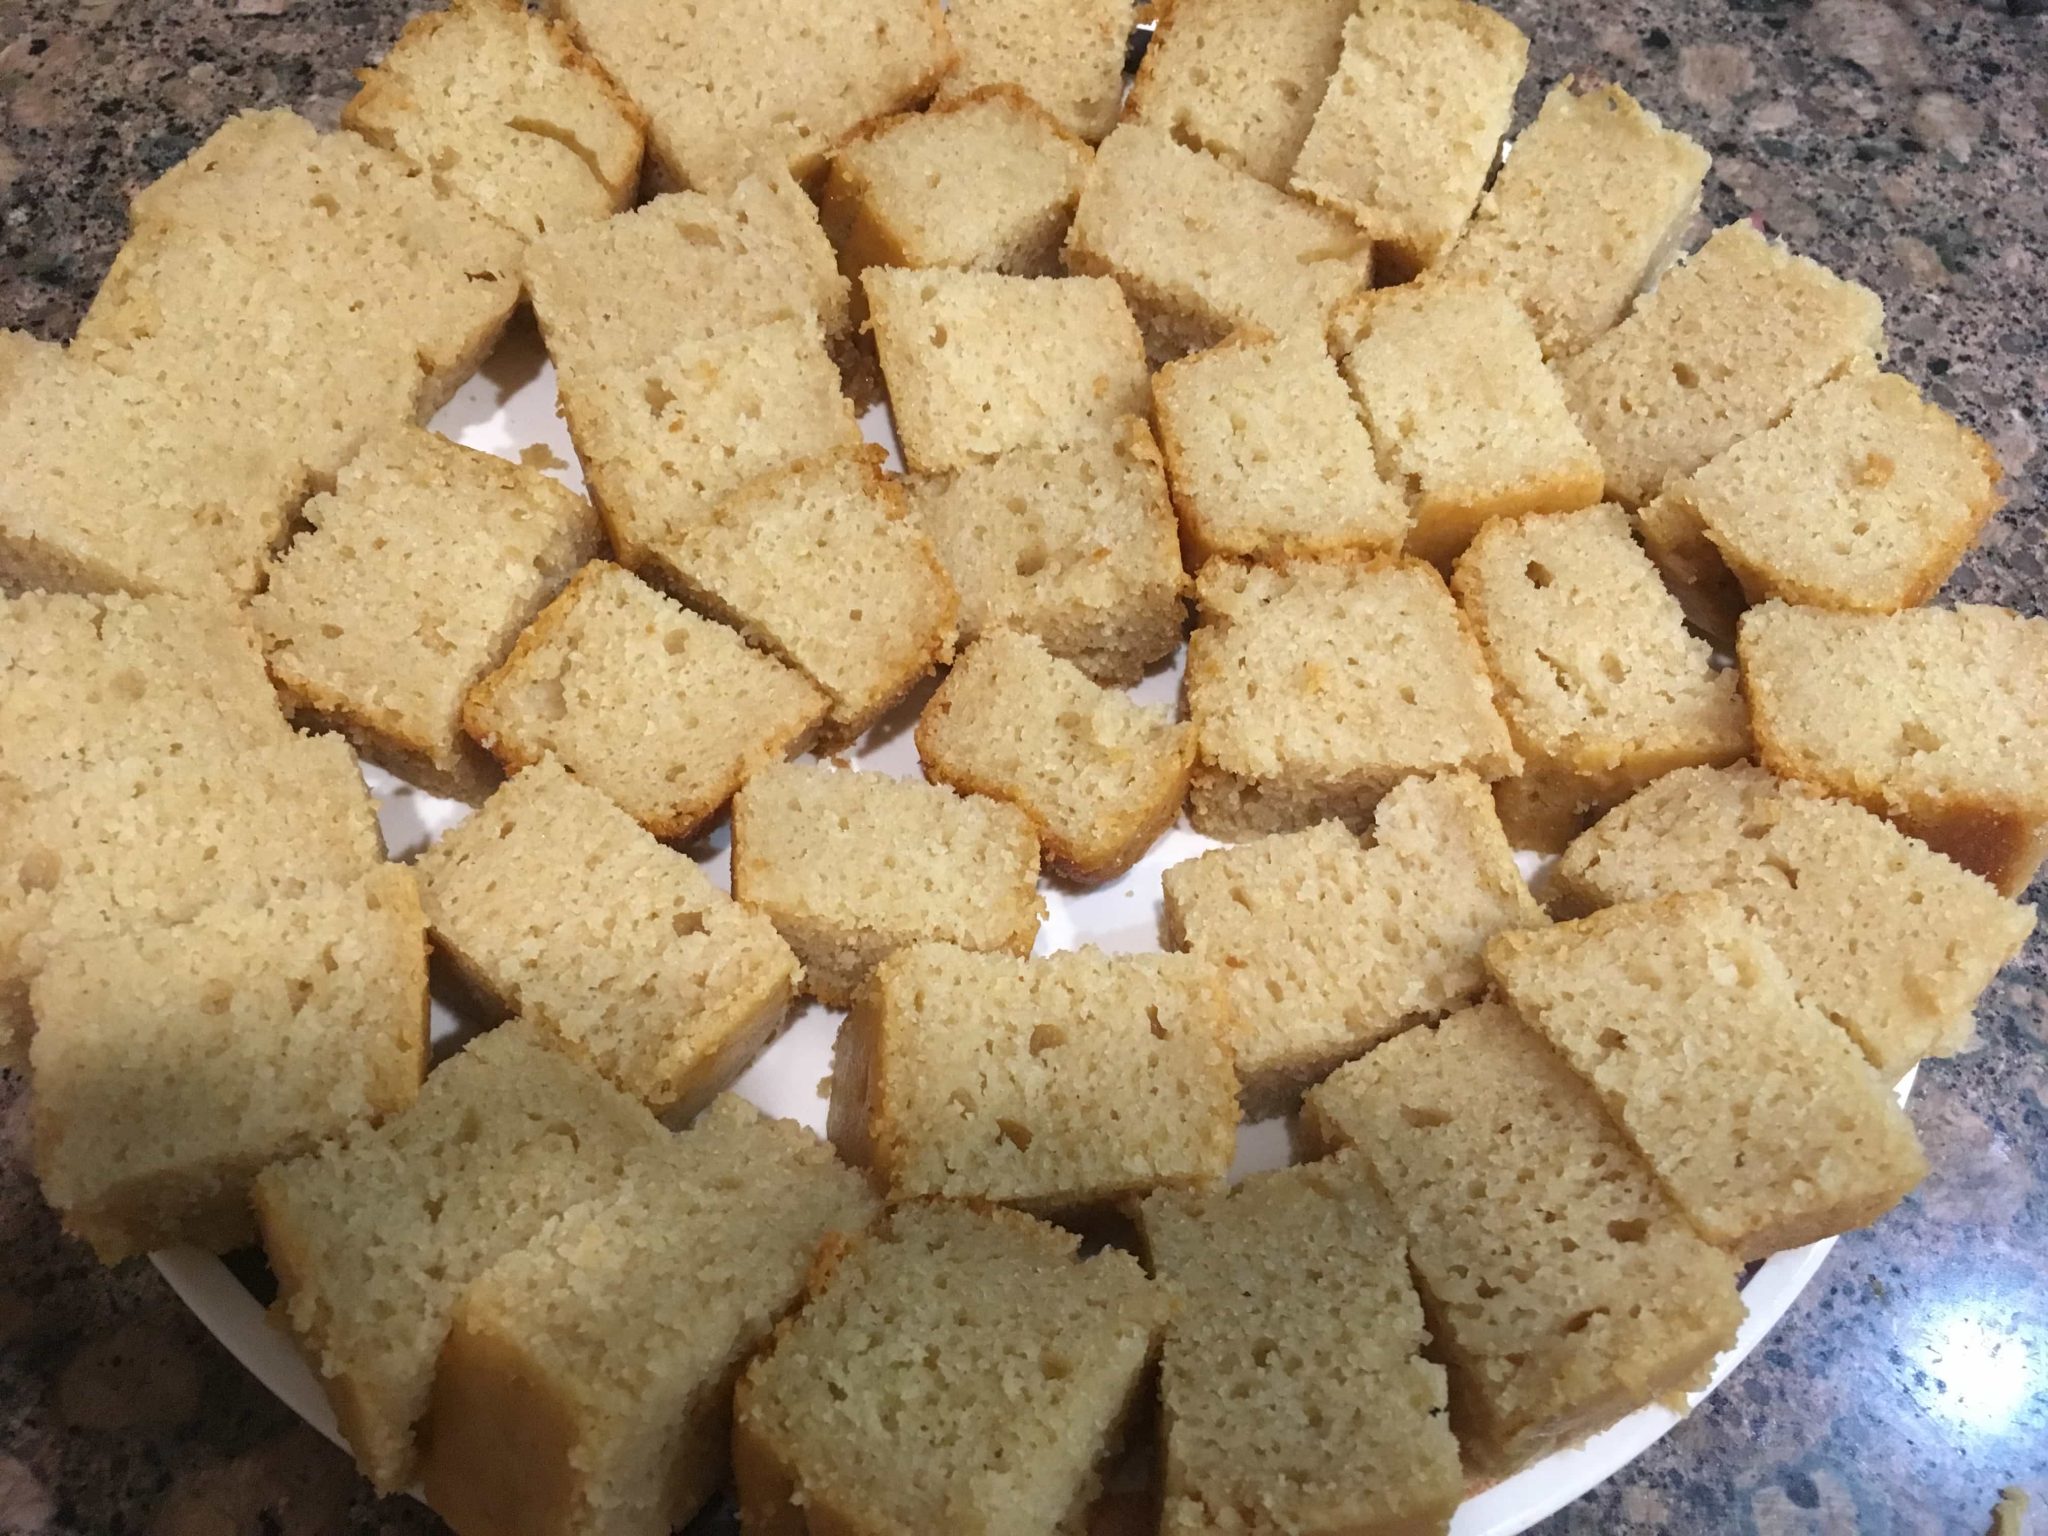 Cut the sponge cake in square pieces